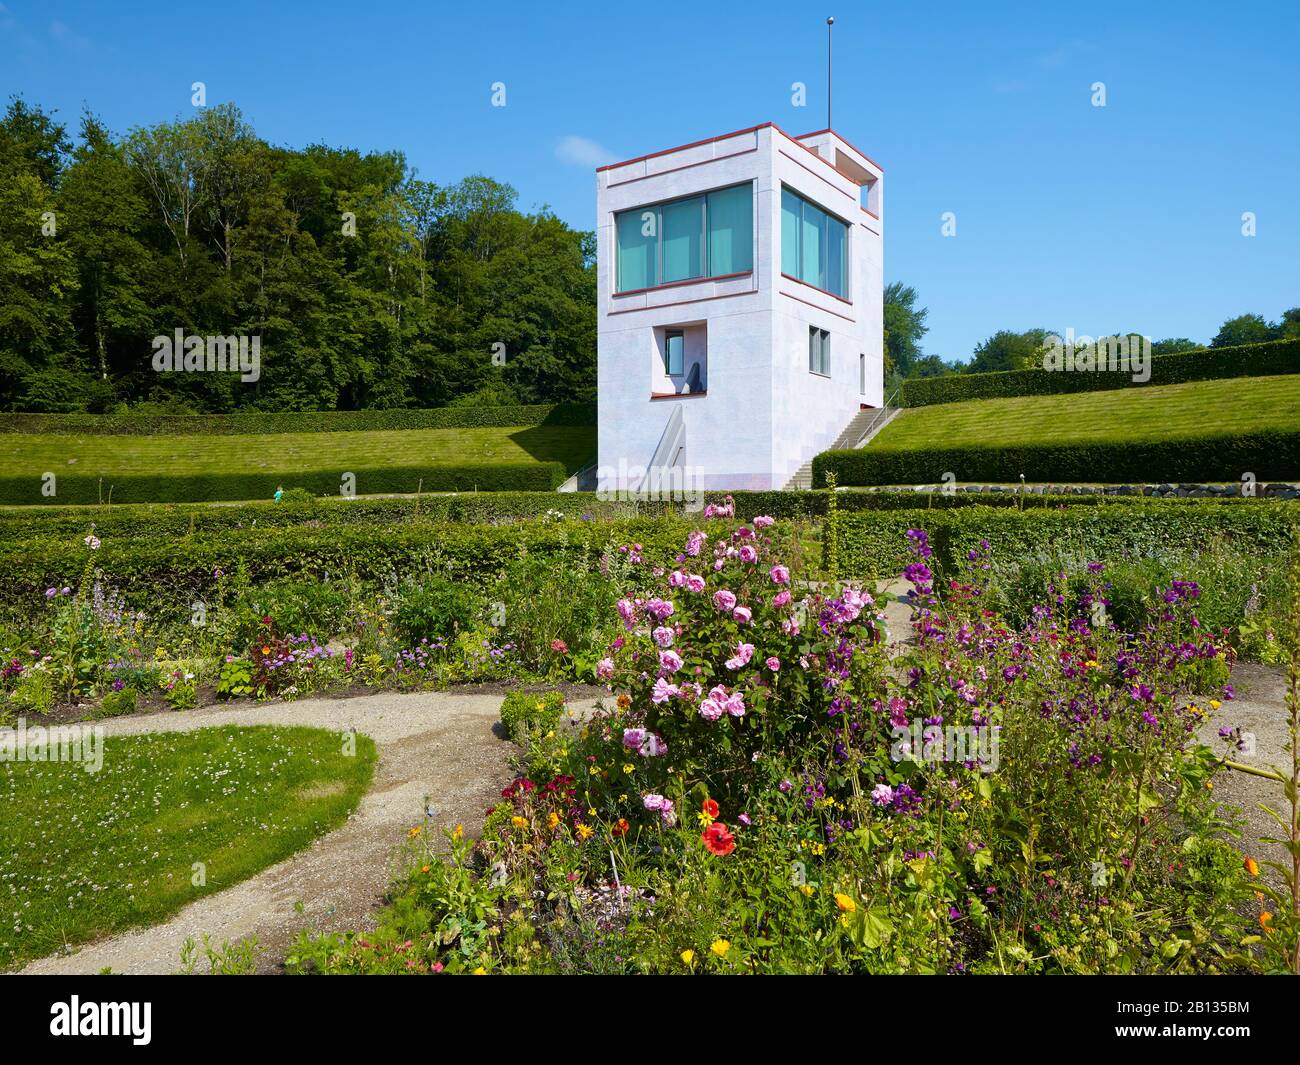 Giardino barocco con casa a globo nello Schleswig-Flensburg,Schleswig-Holstein,Germania Foto Stock